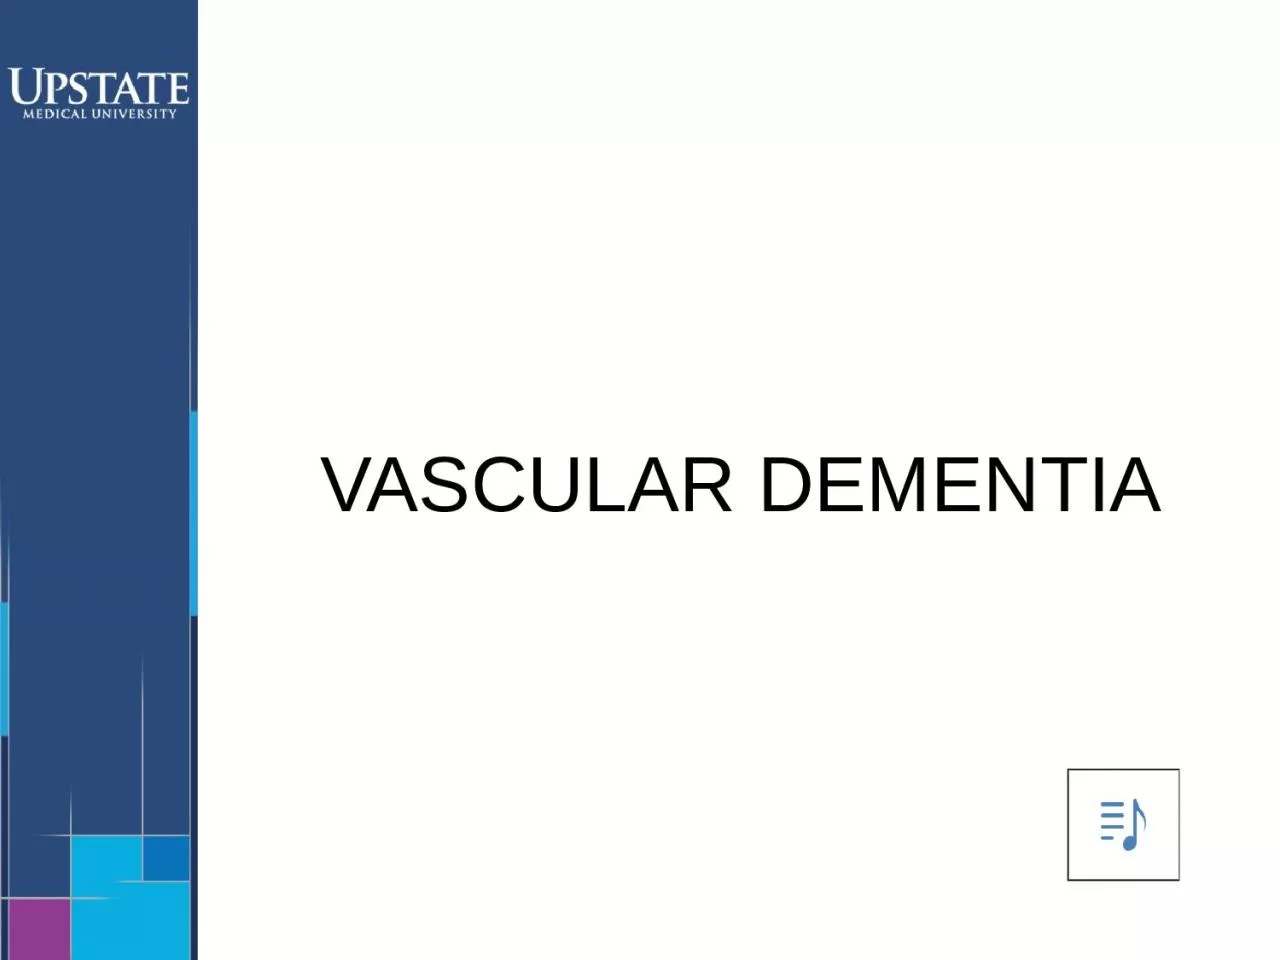 VASCULAR DEMENTIA What is Vascular Dementia?